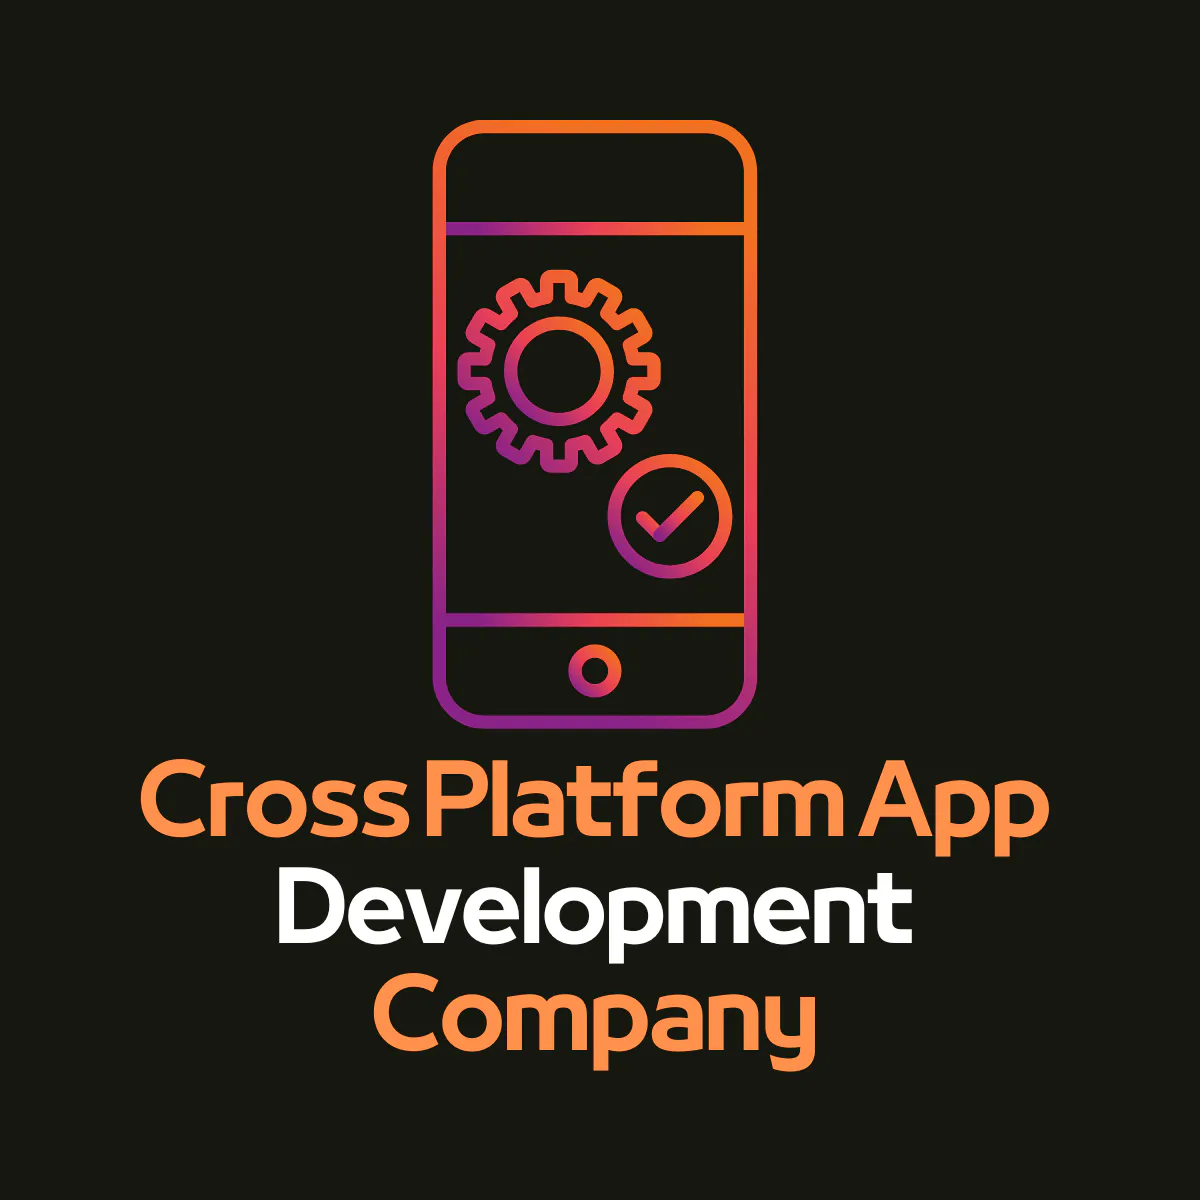 One-Stop Shop for Cross-Platform App Development